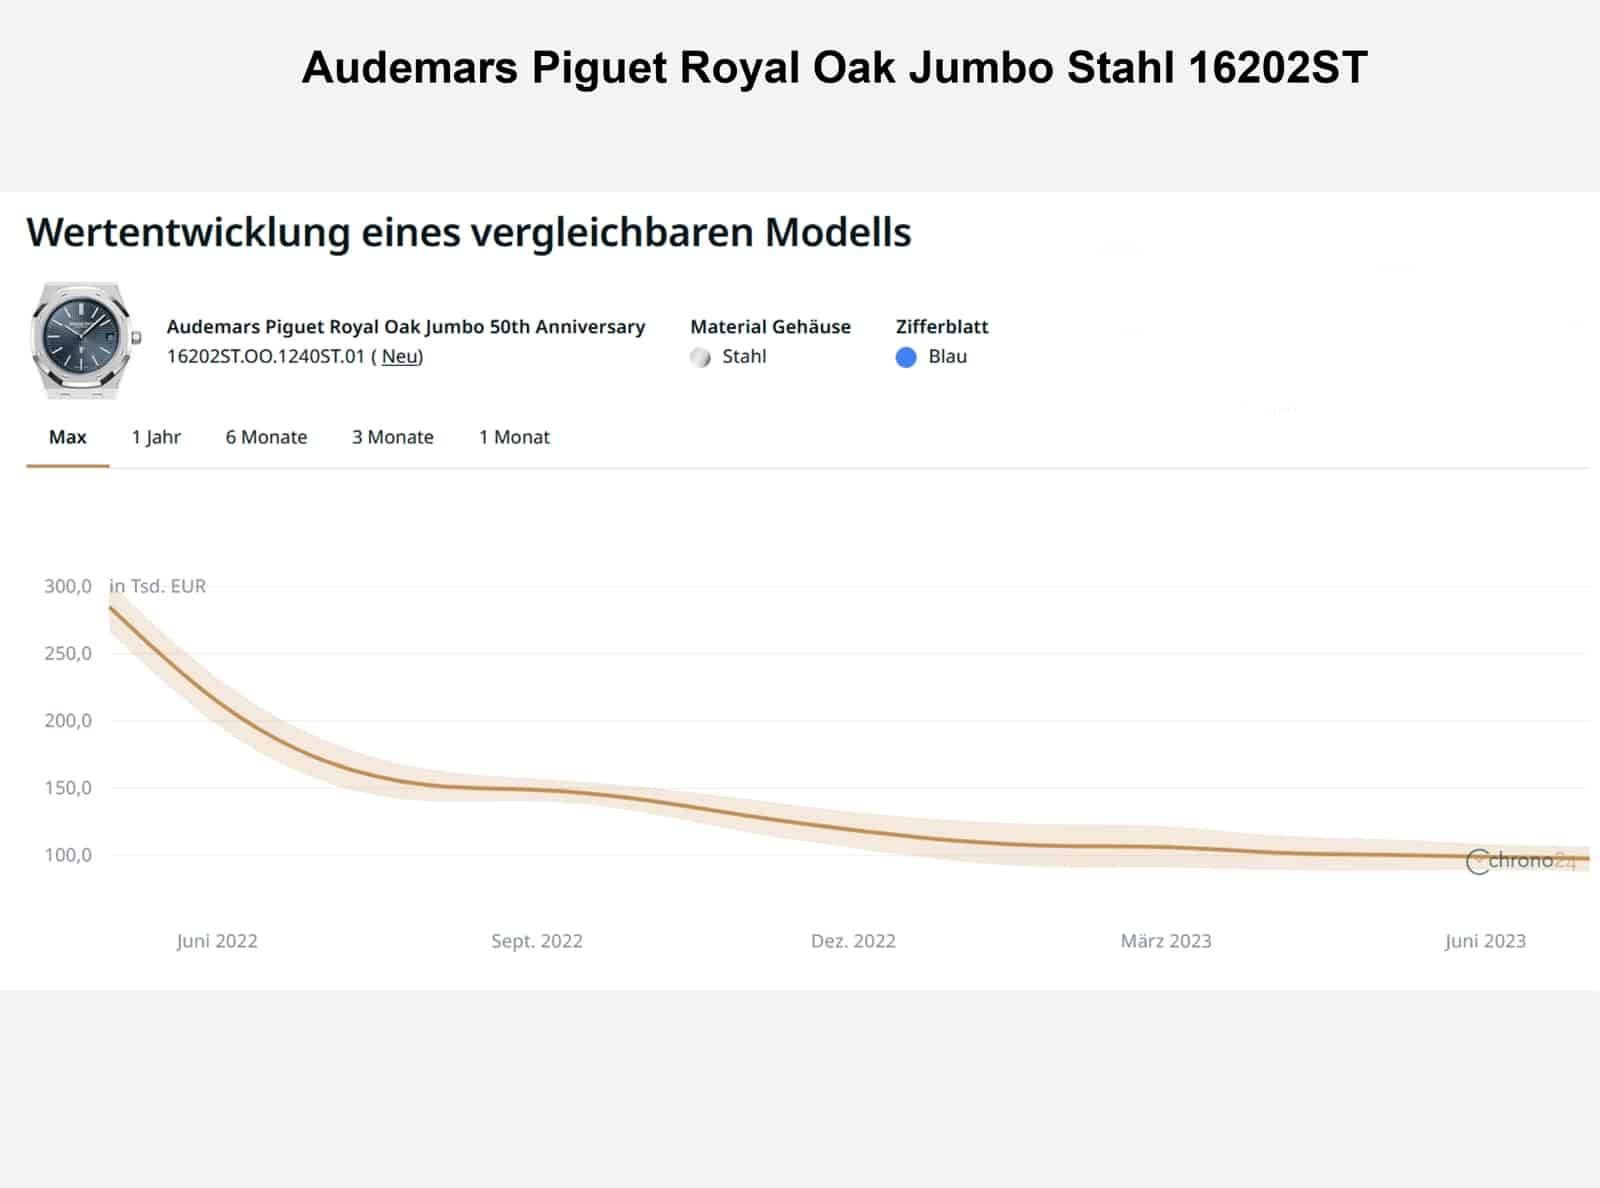 Audemars Piguet Royal Oak 16202ST Preisentwicklung Chrono24 202307